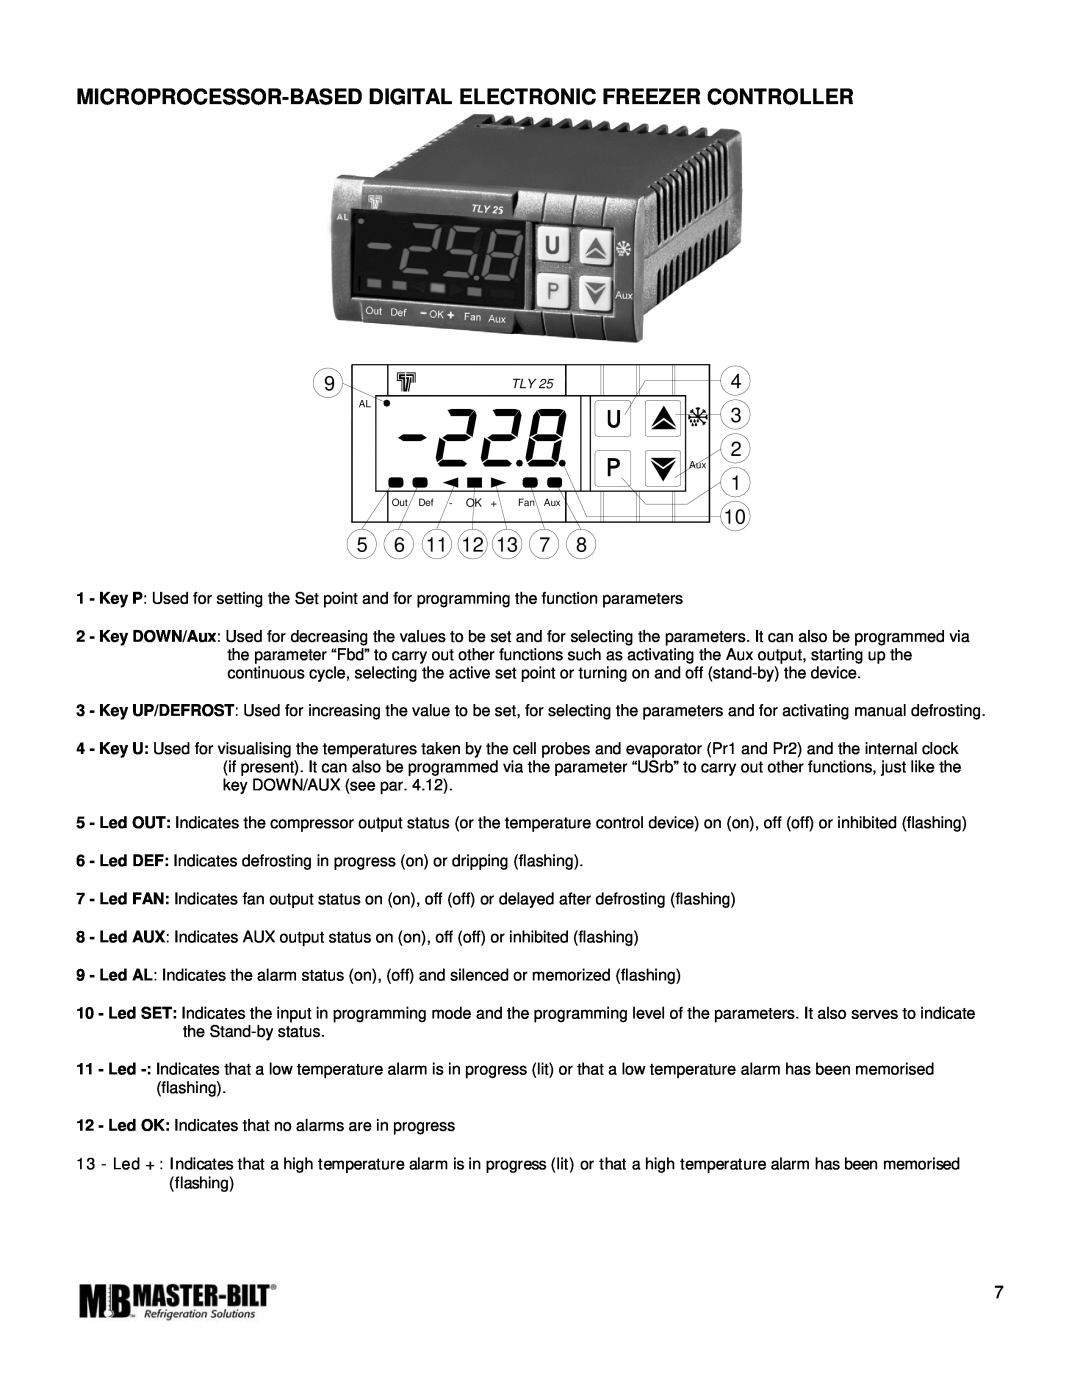 Master Bilt IM-23GB manual Microprocessor-Based Digital Electronic Freezer Controller 